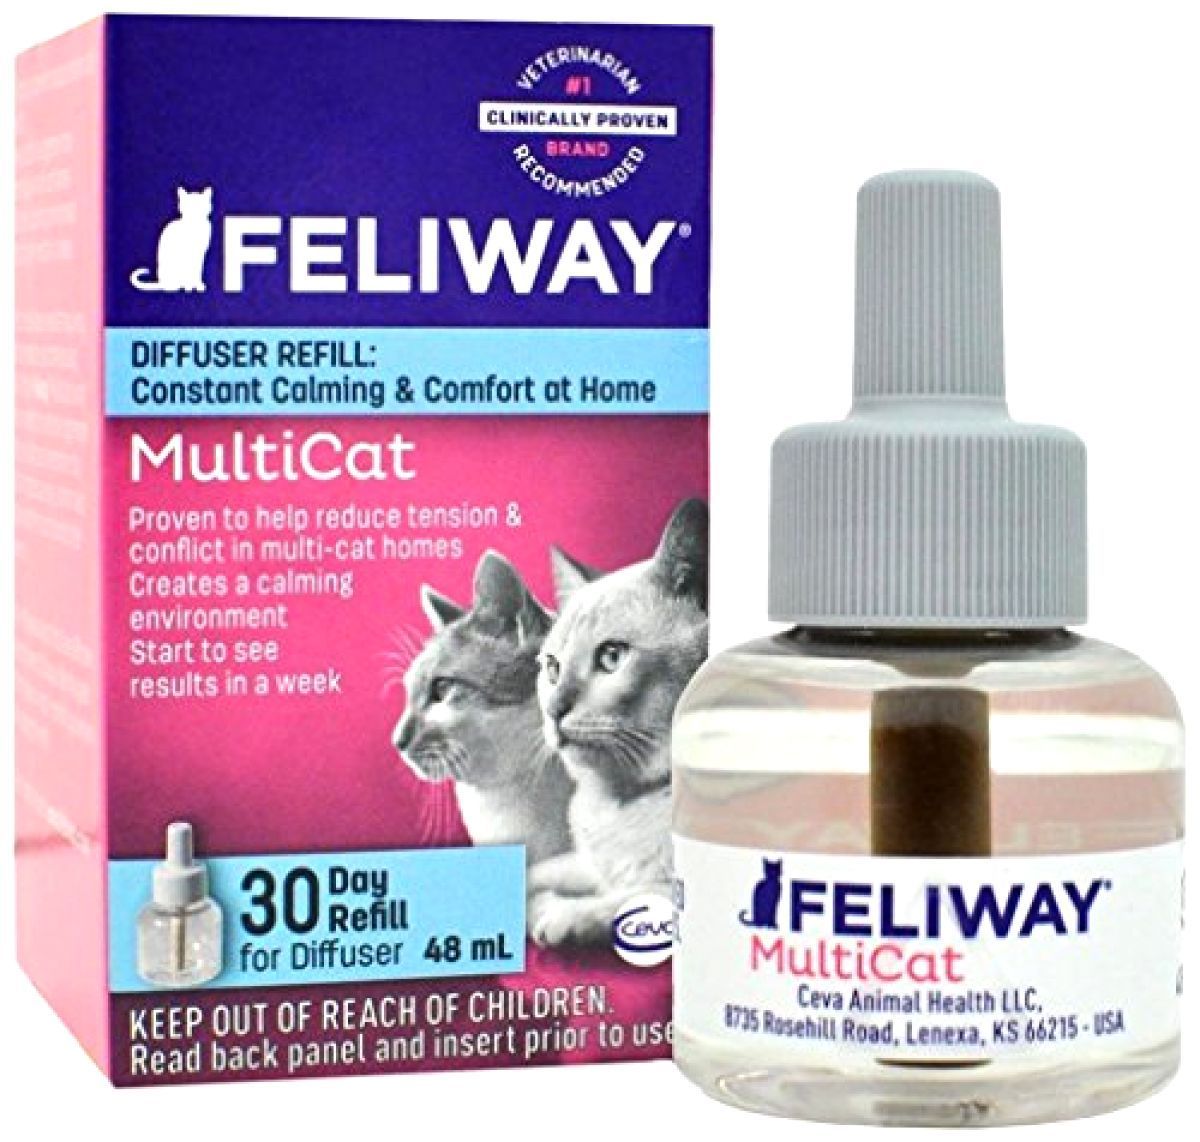 CEVA Animal Health Feliway MultiCat 30 Day Refill Diffuser 48ml Pheromone